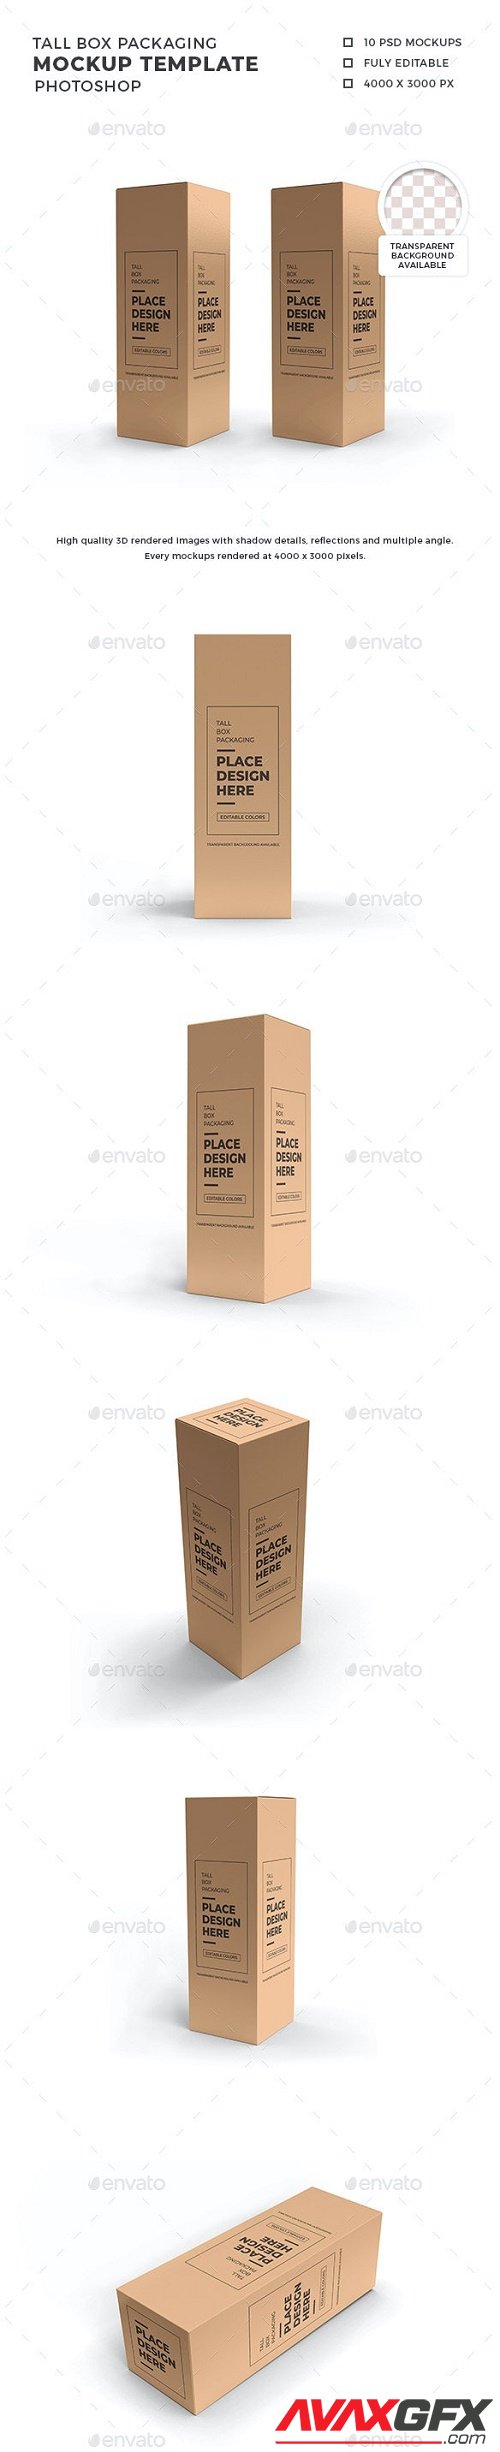 Tall Box Packaging Mockup Template - 29932374